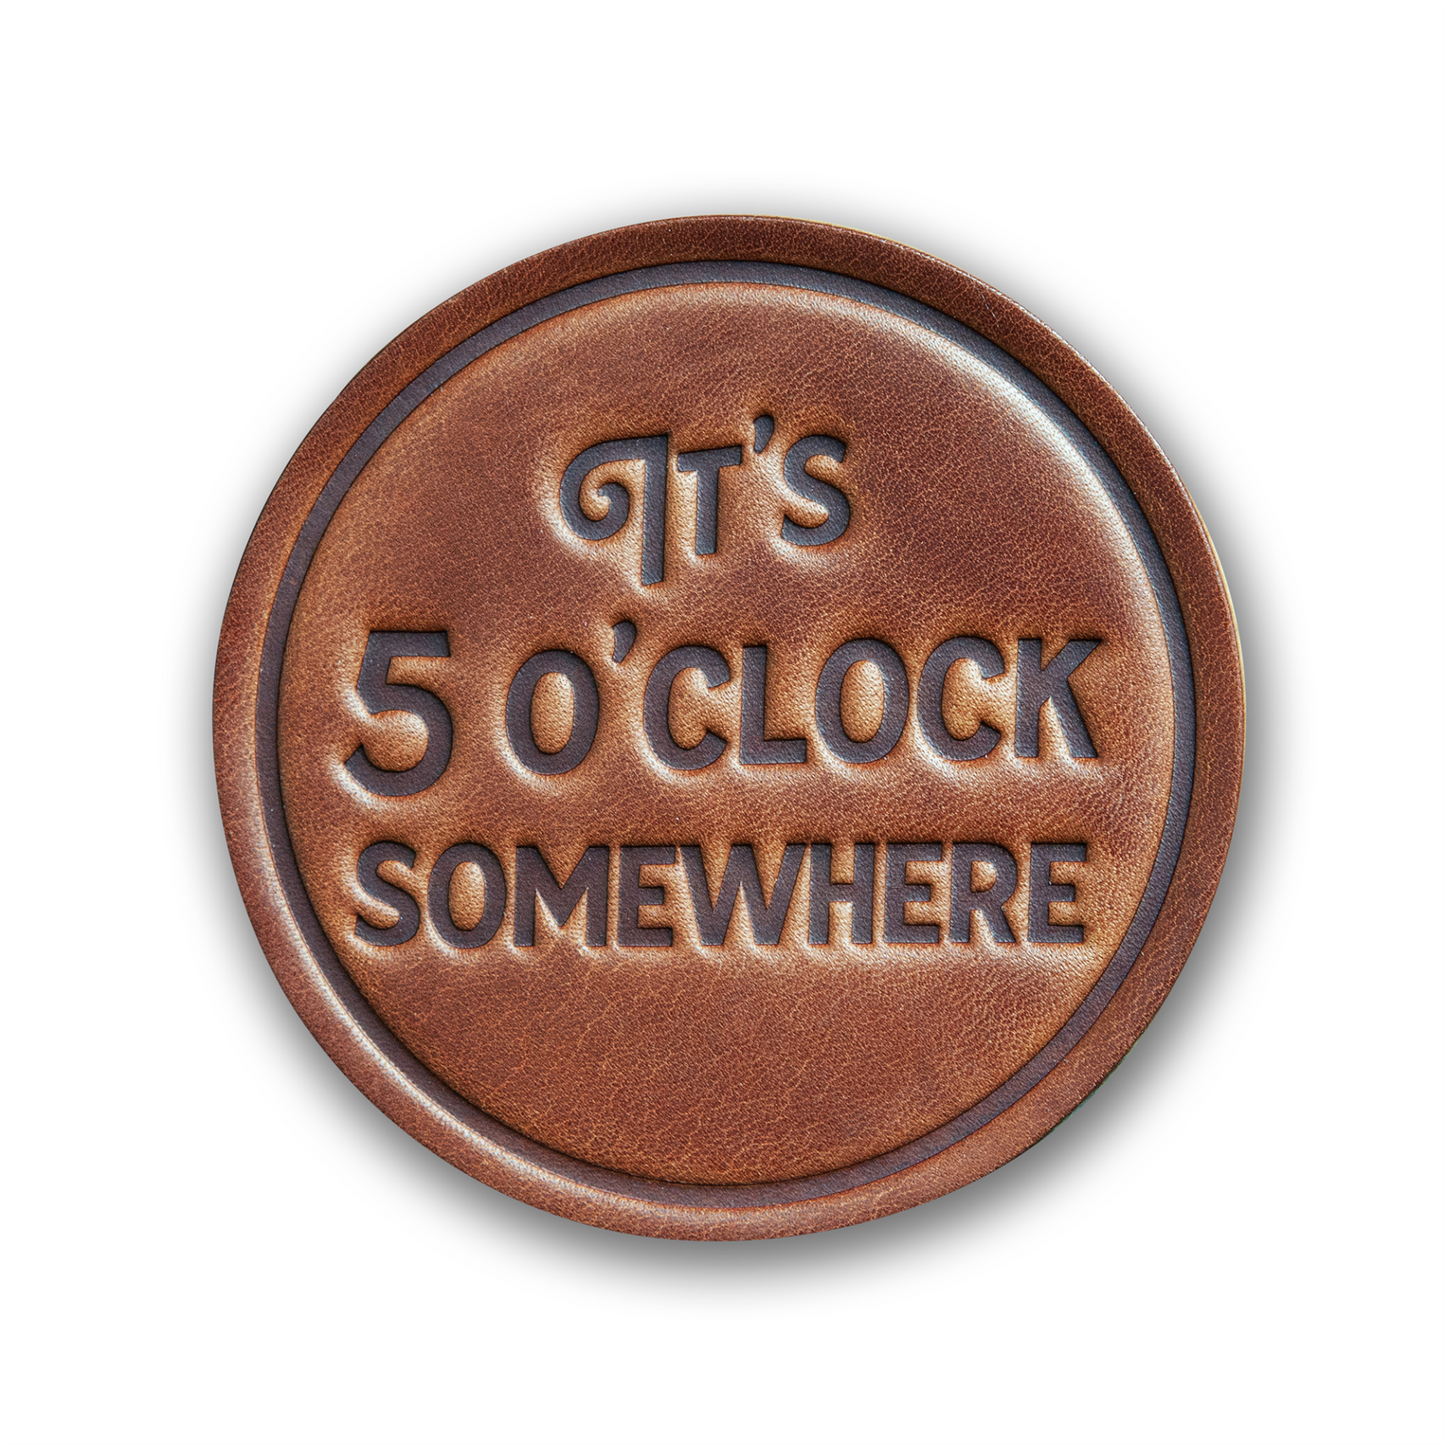 IT’S 5 O’CLOCK SOMEWHERE COASTER